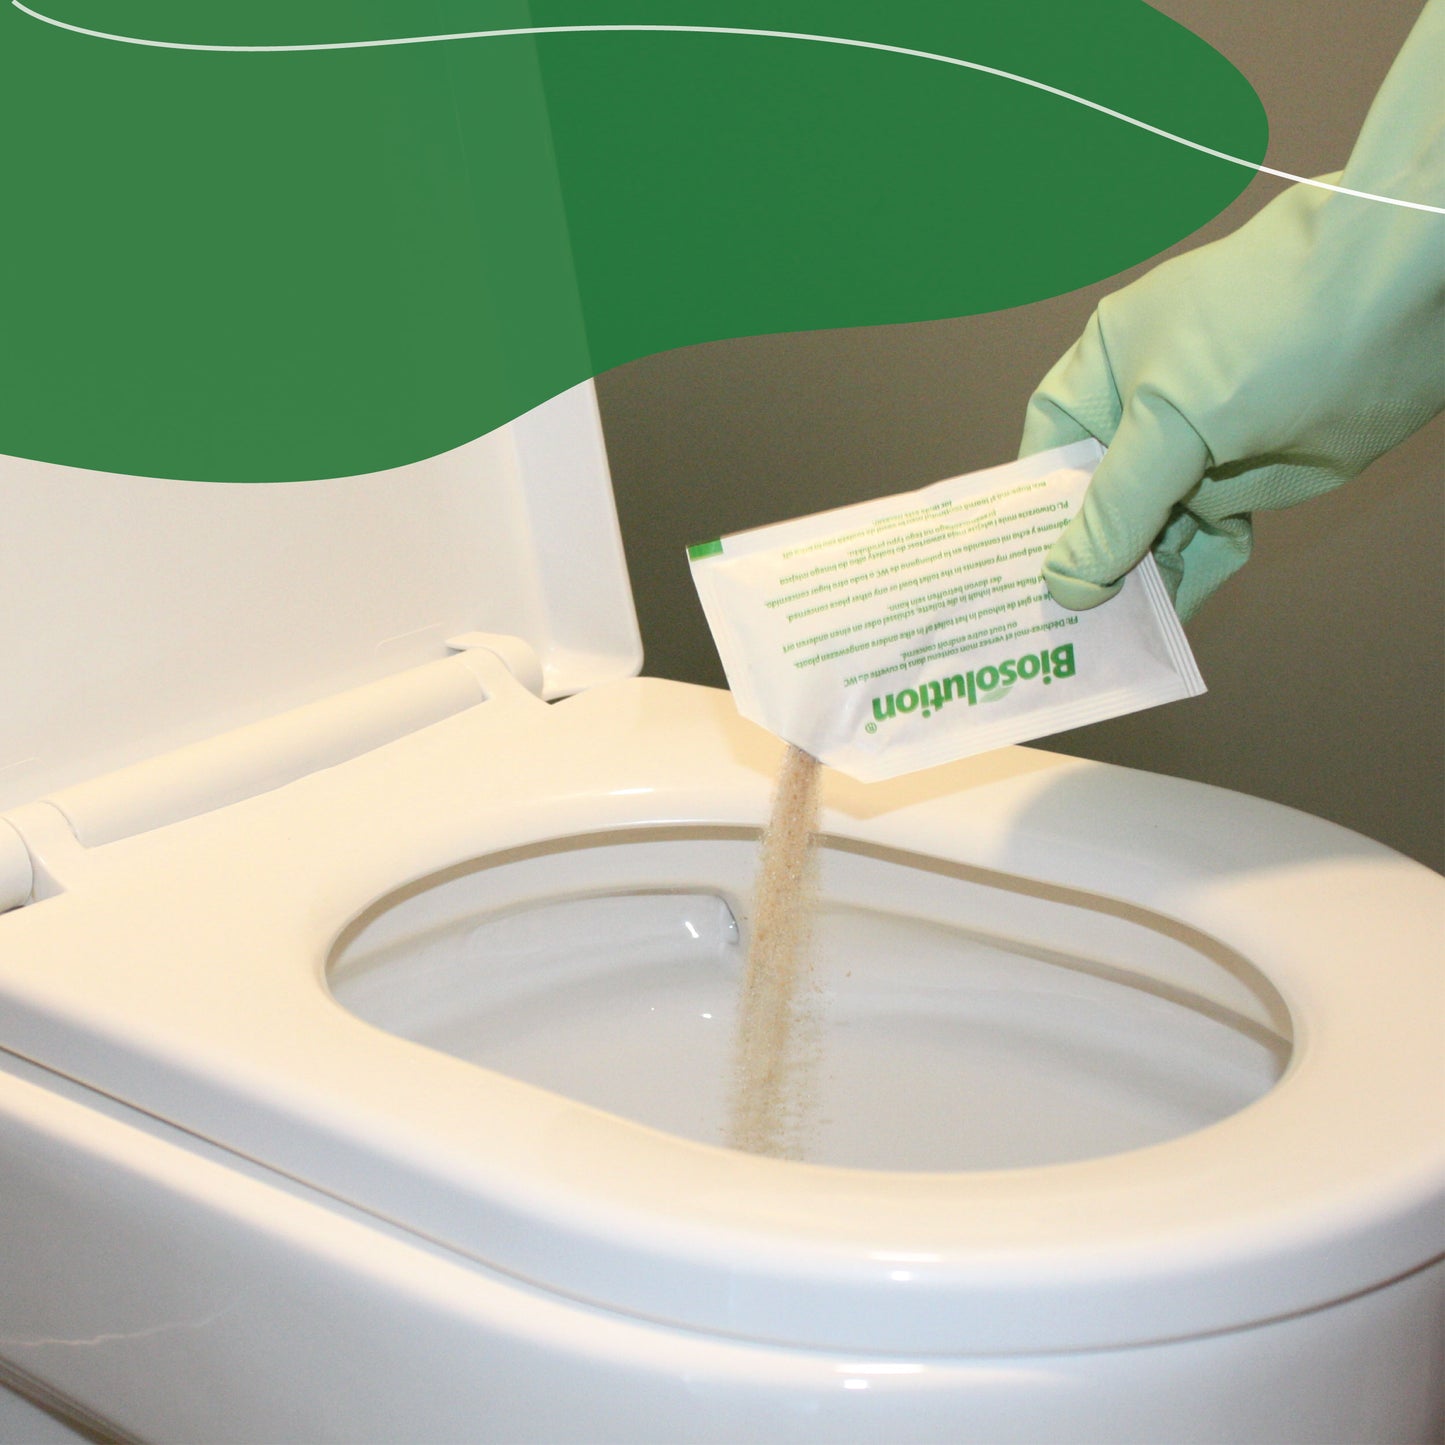 Tratamiento fosas sépticas - Sachets, Fórmula biológica, Ideal para WC, lavamanos, tuberías conectadas a una fosa séptica.